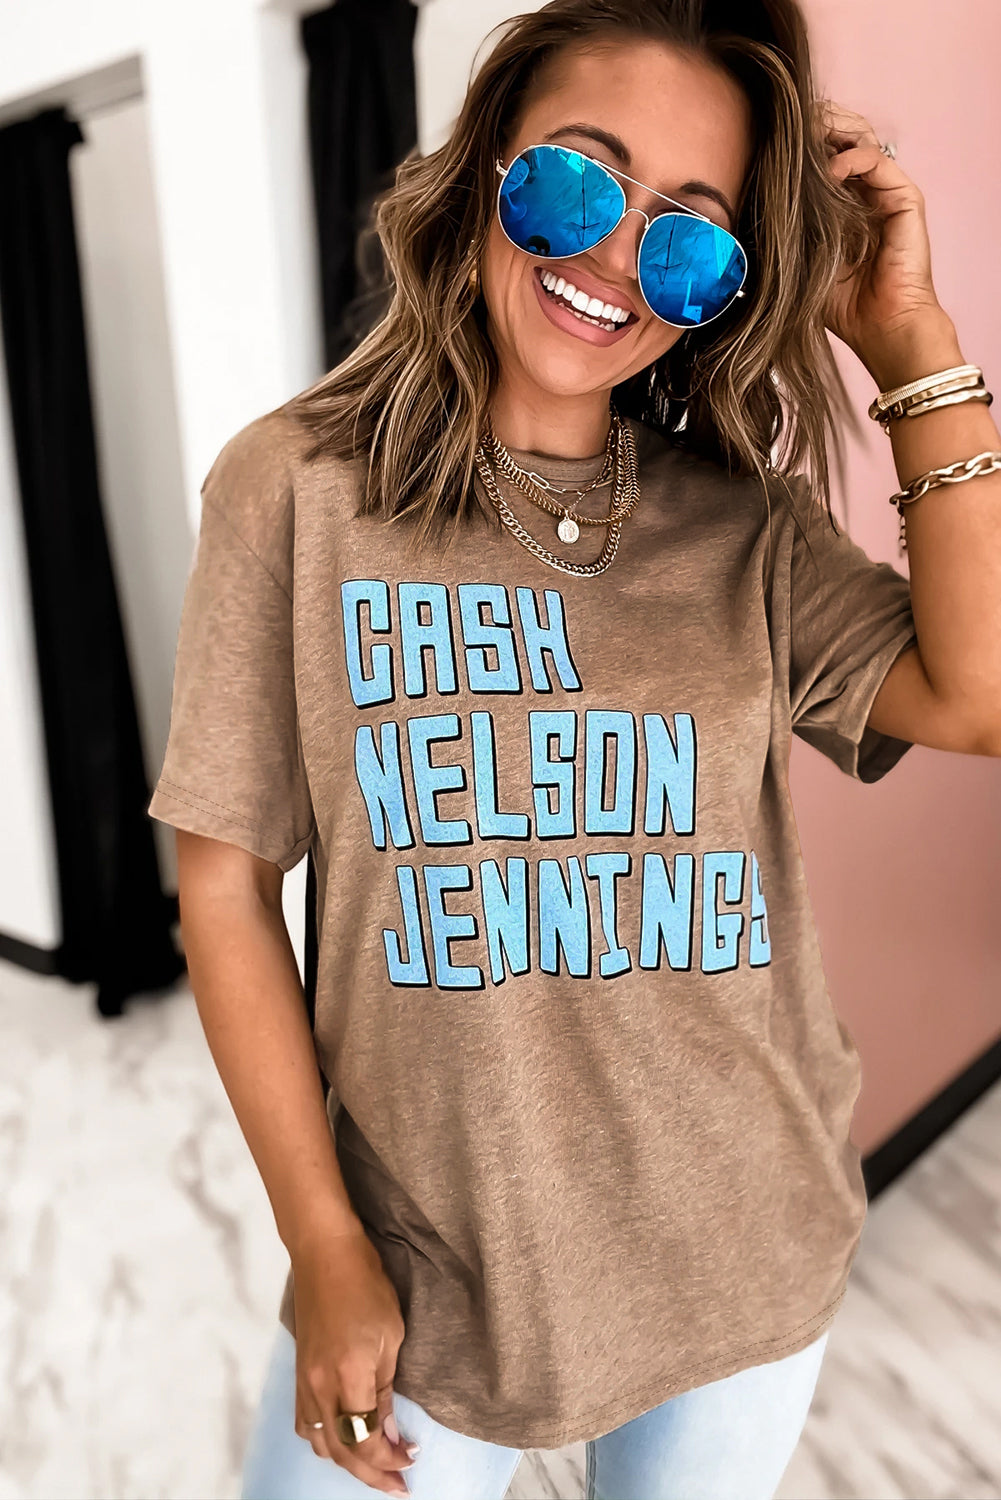 cash nelson jennings shirt